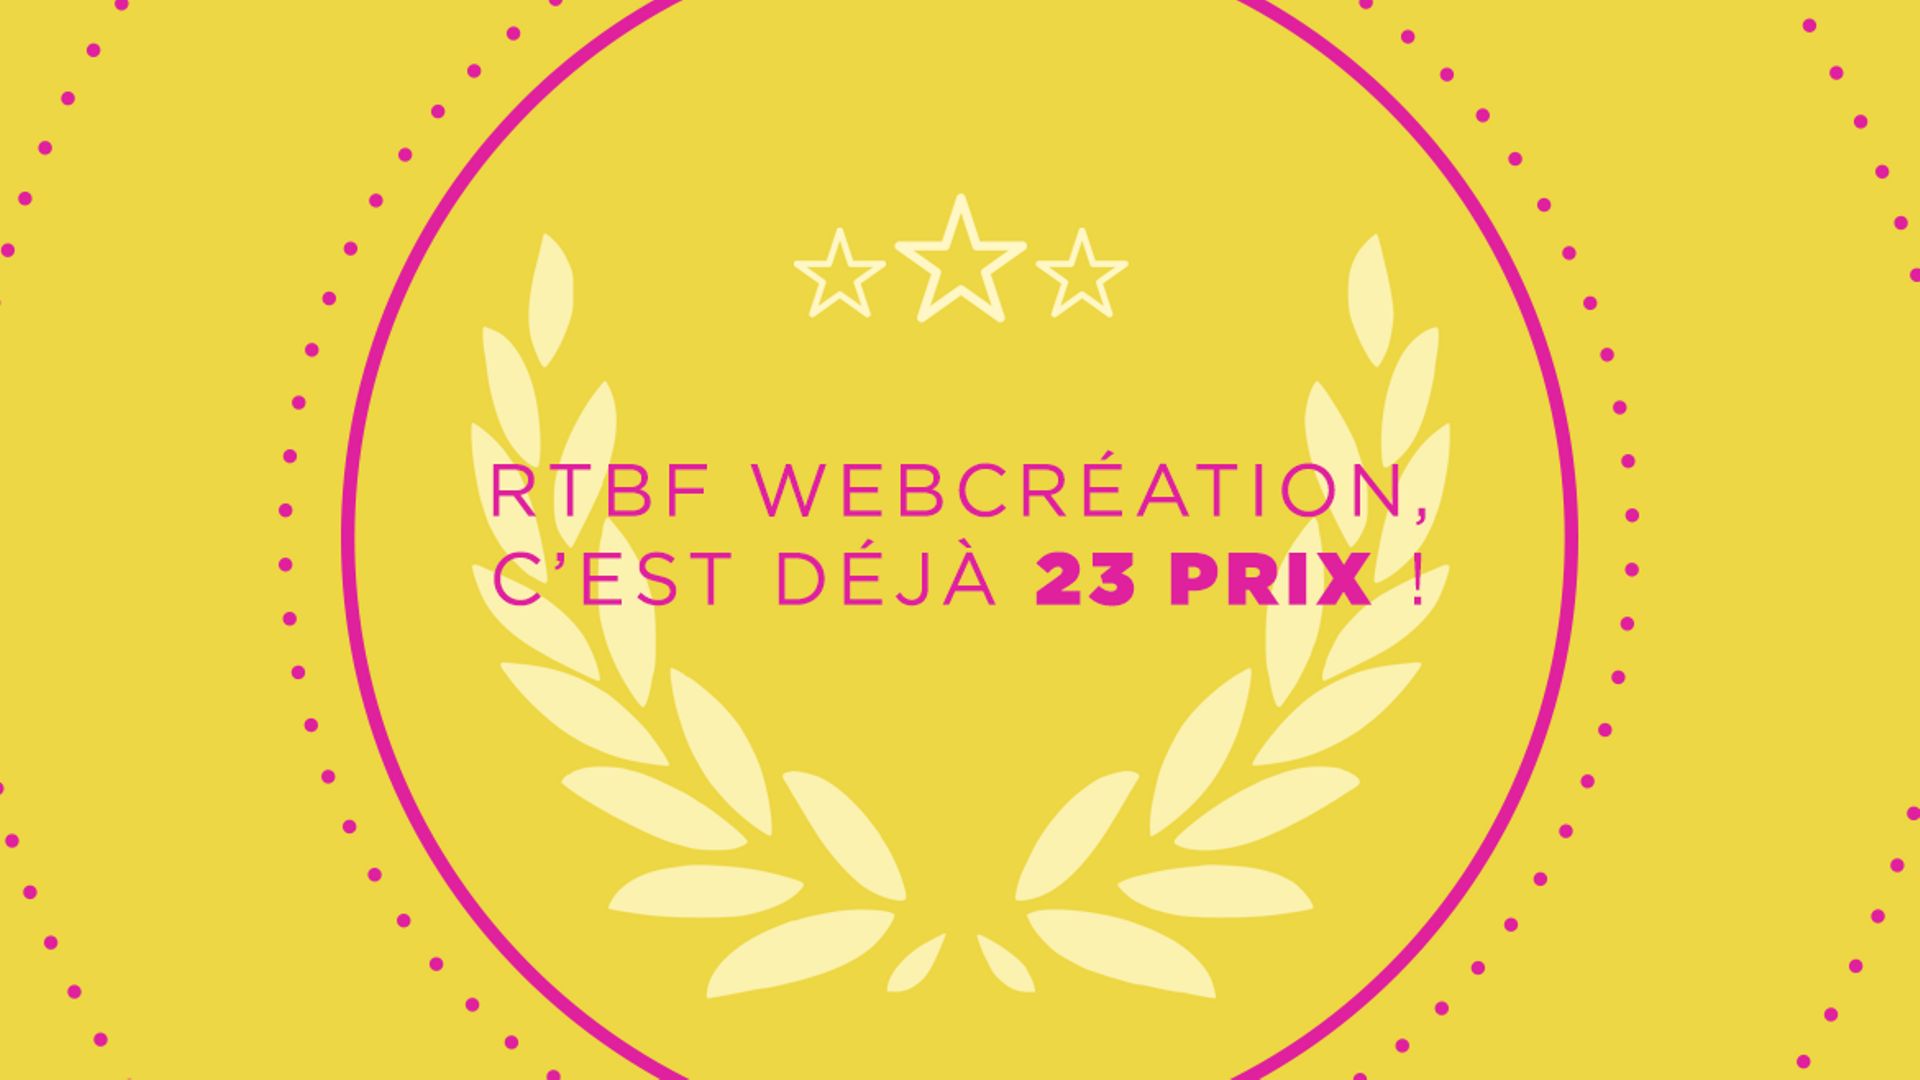 rtbf-webcreation-c-est-deja-23-prix